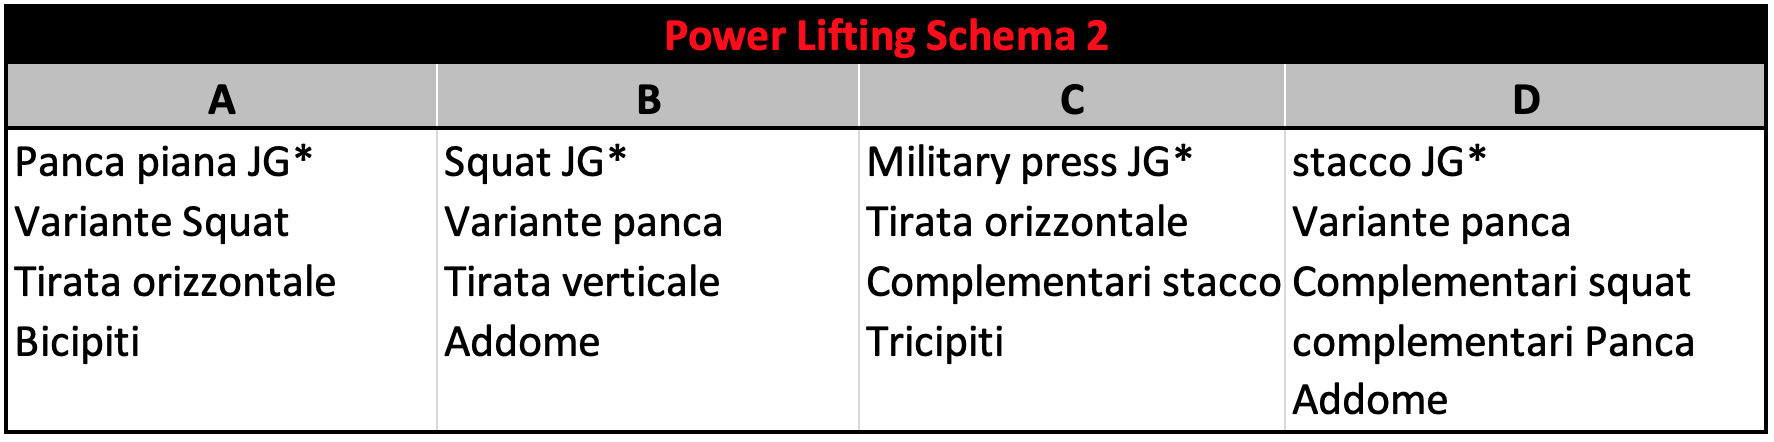 power Lifting schema 2 - 2 squat, 3 panche, 1 stacco